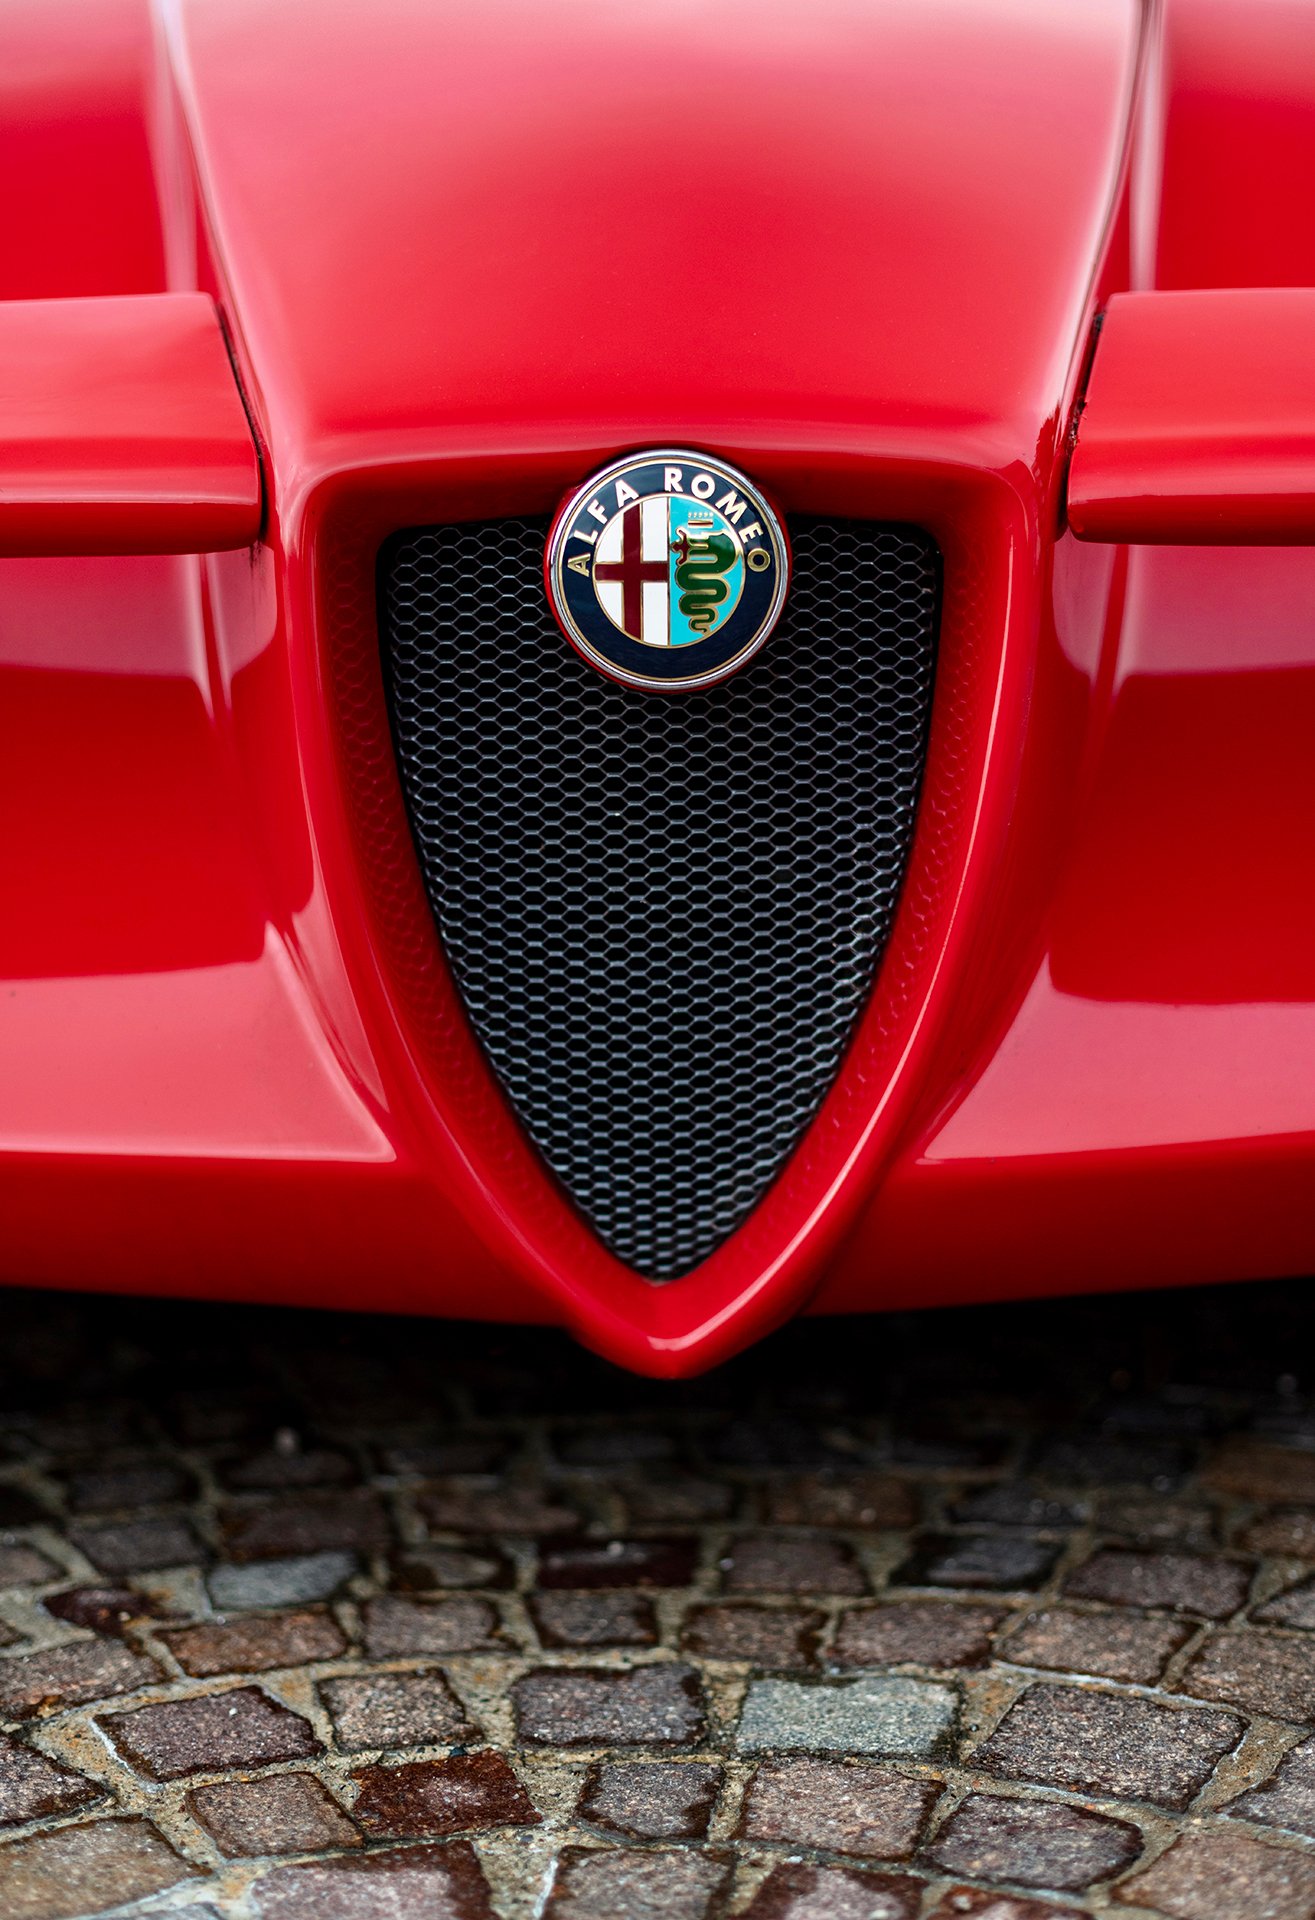 Alfa Romeo Diva (Sbarro), 2006